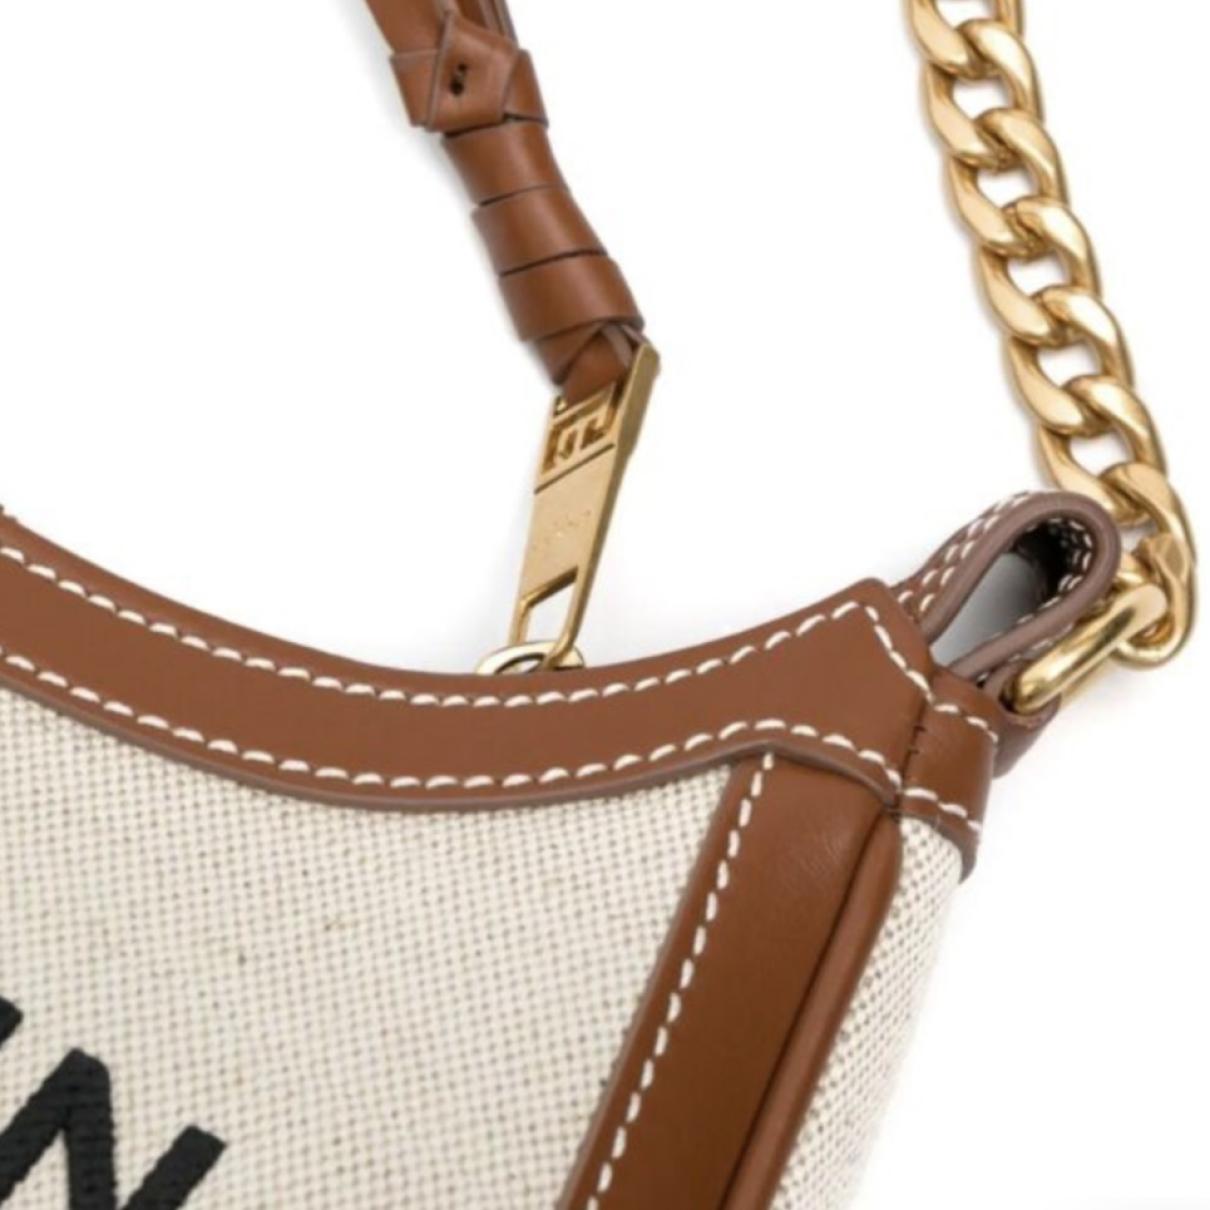 Leather handbag - 3